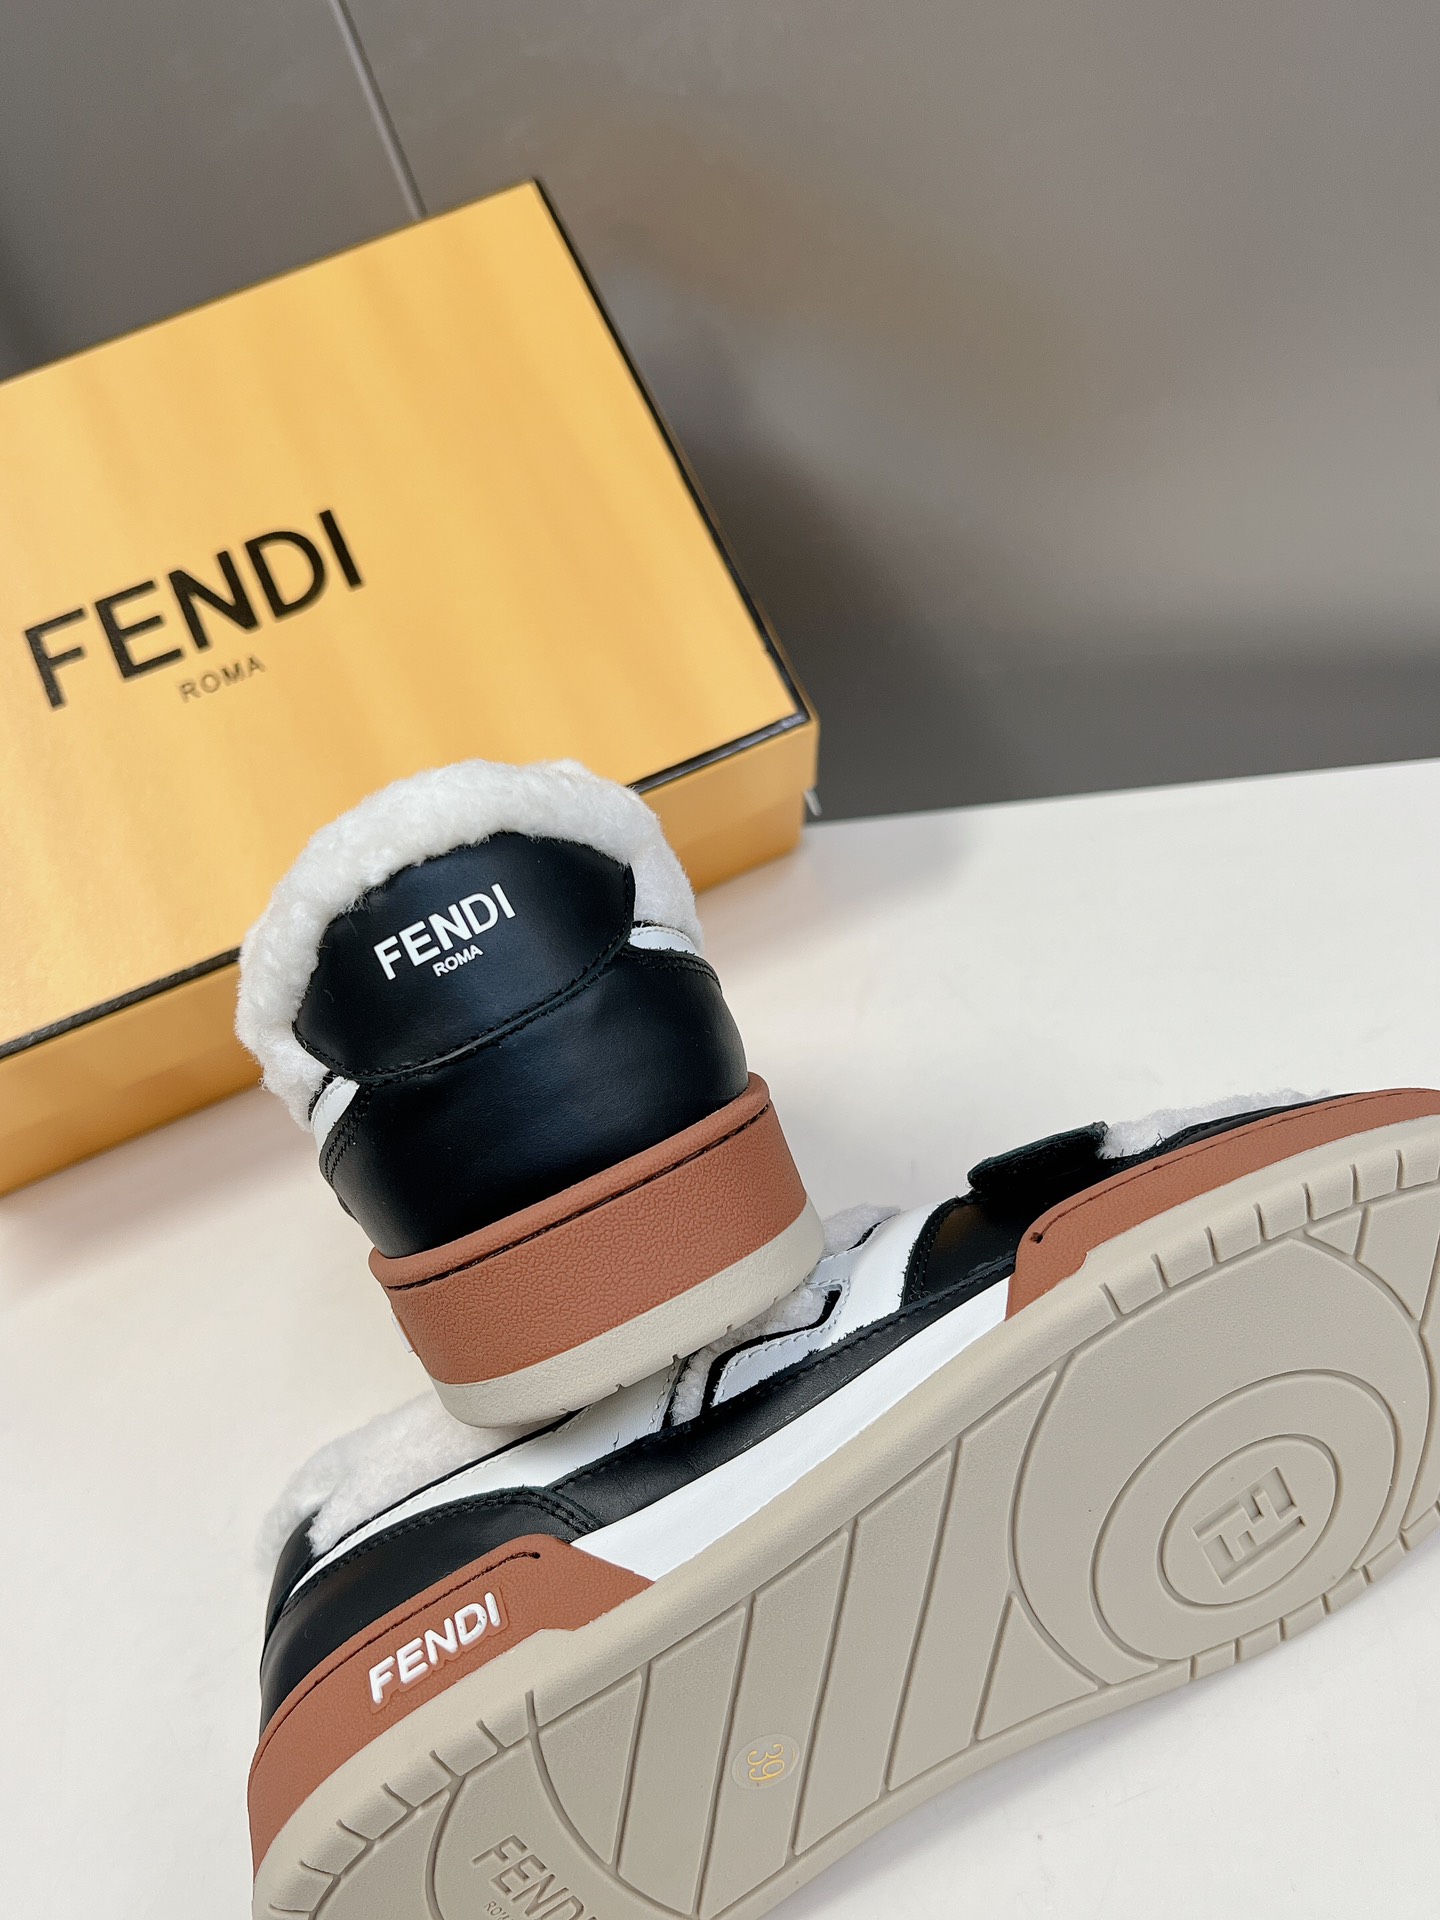 Fendi芬迪经典爆款系列情侣休闲魔术贴运动鞋FDmatch一比一复刻设计师KimJones打造的首款运